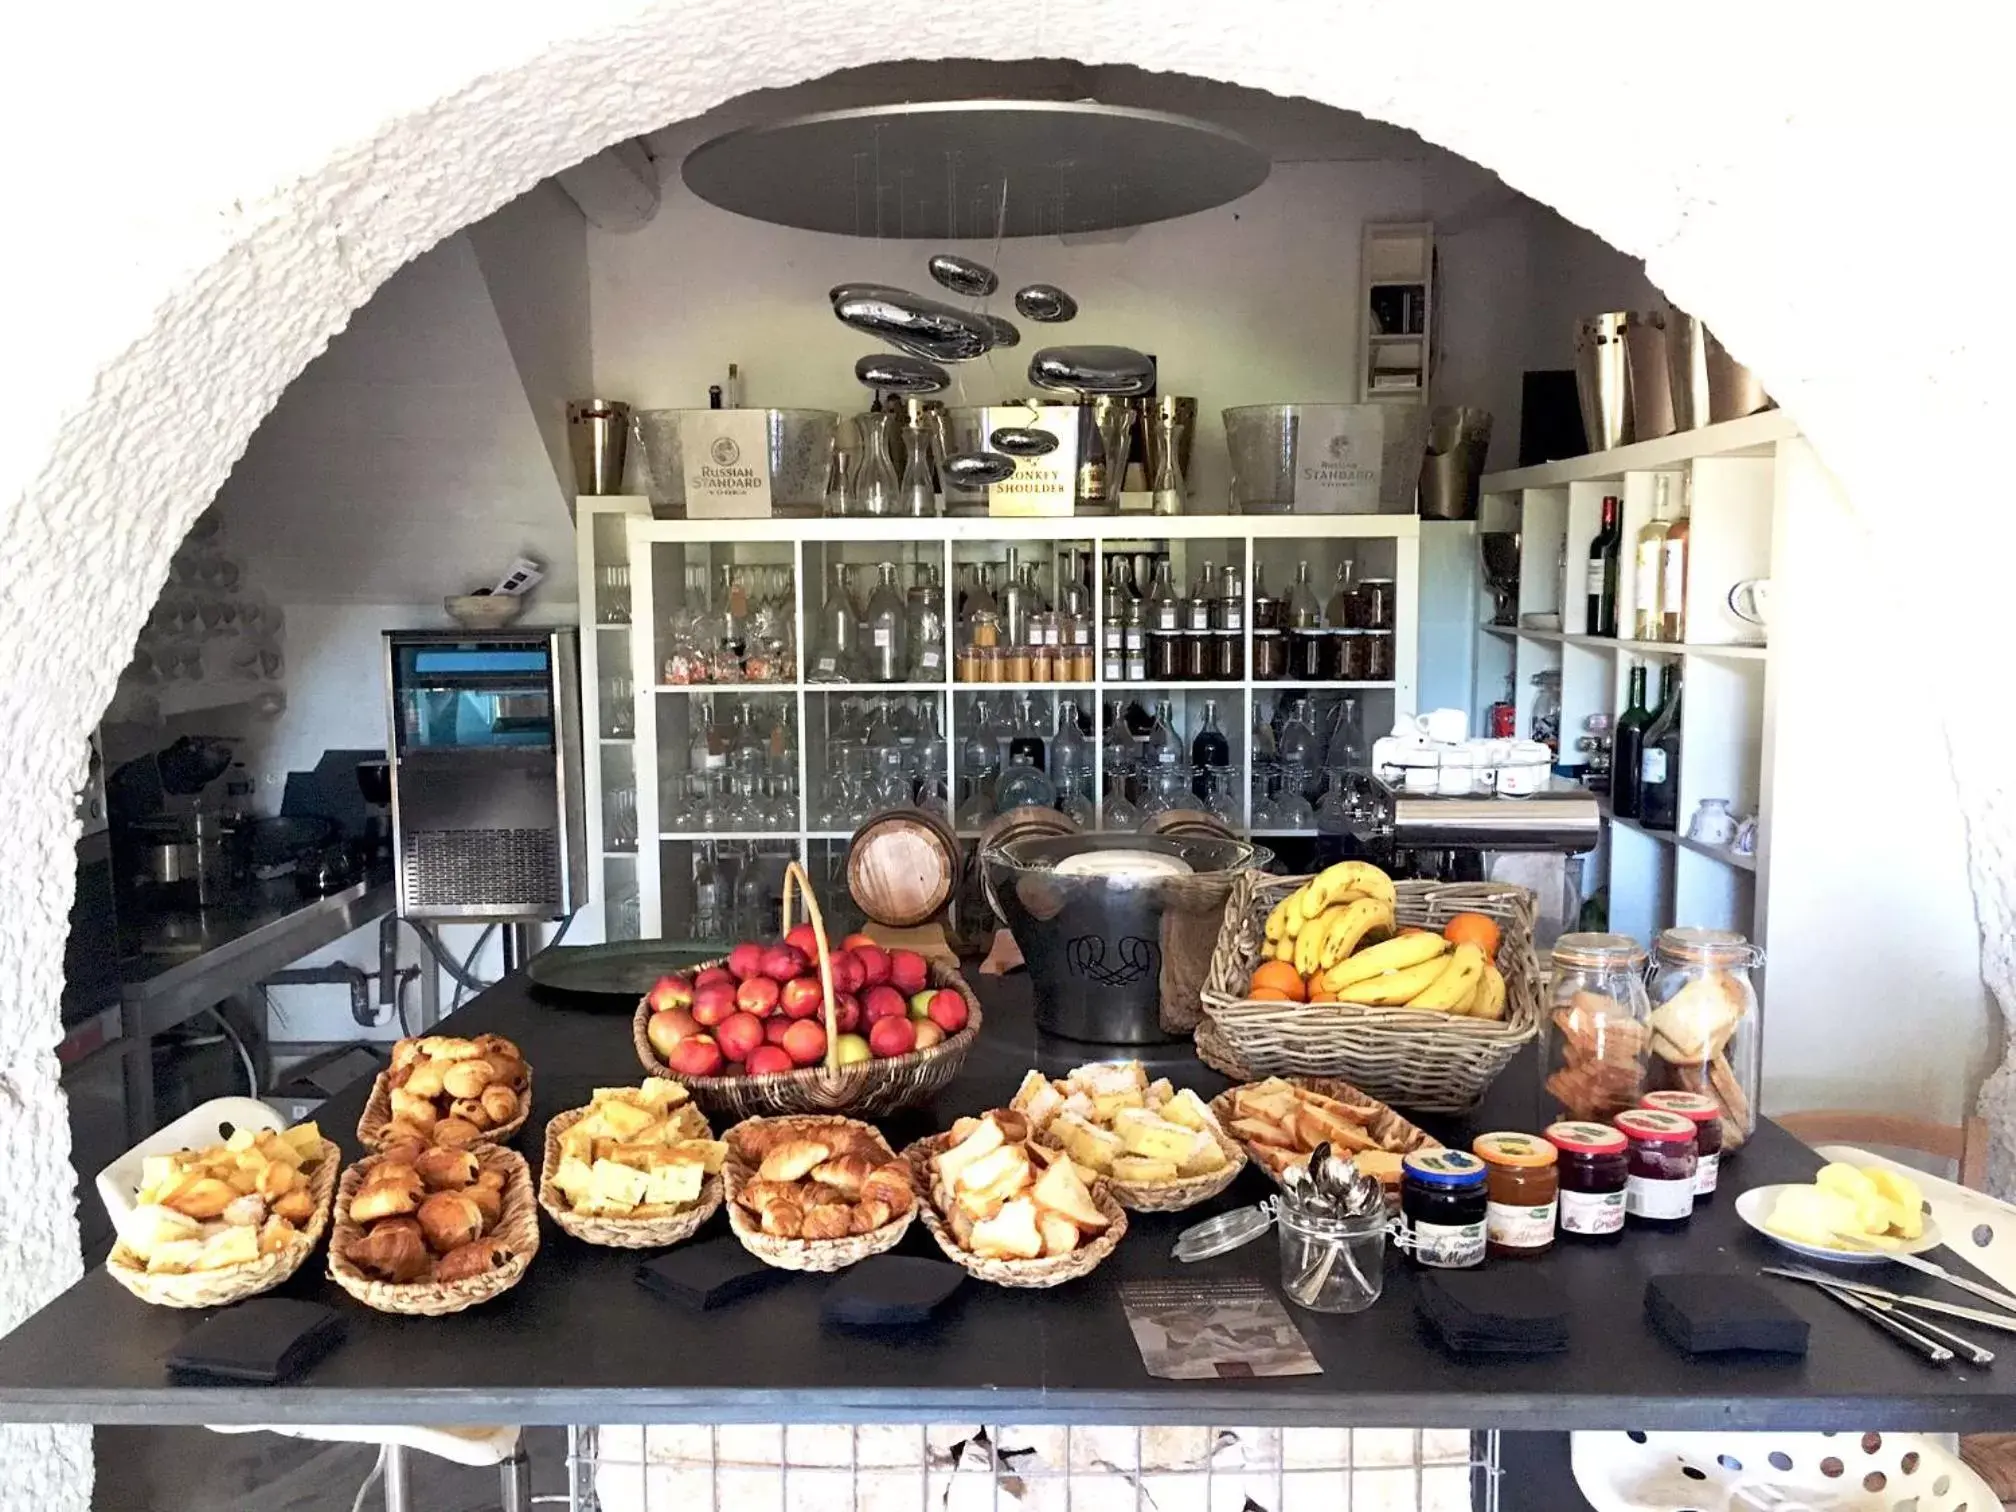 Buffet breakfast in Domaine Regis Freres